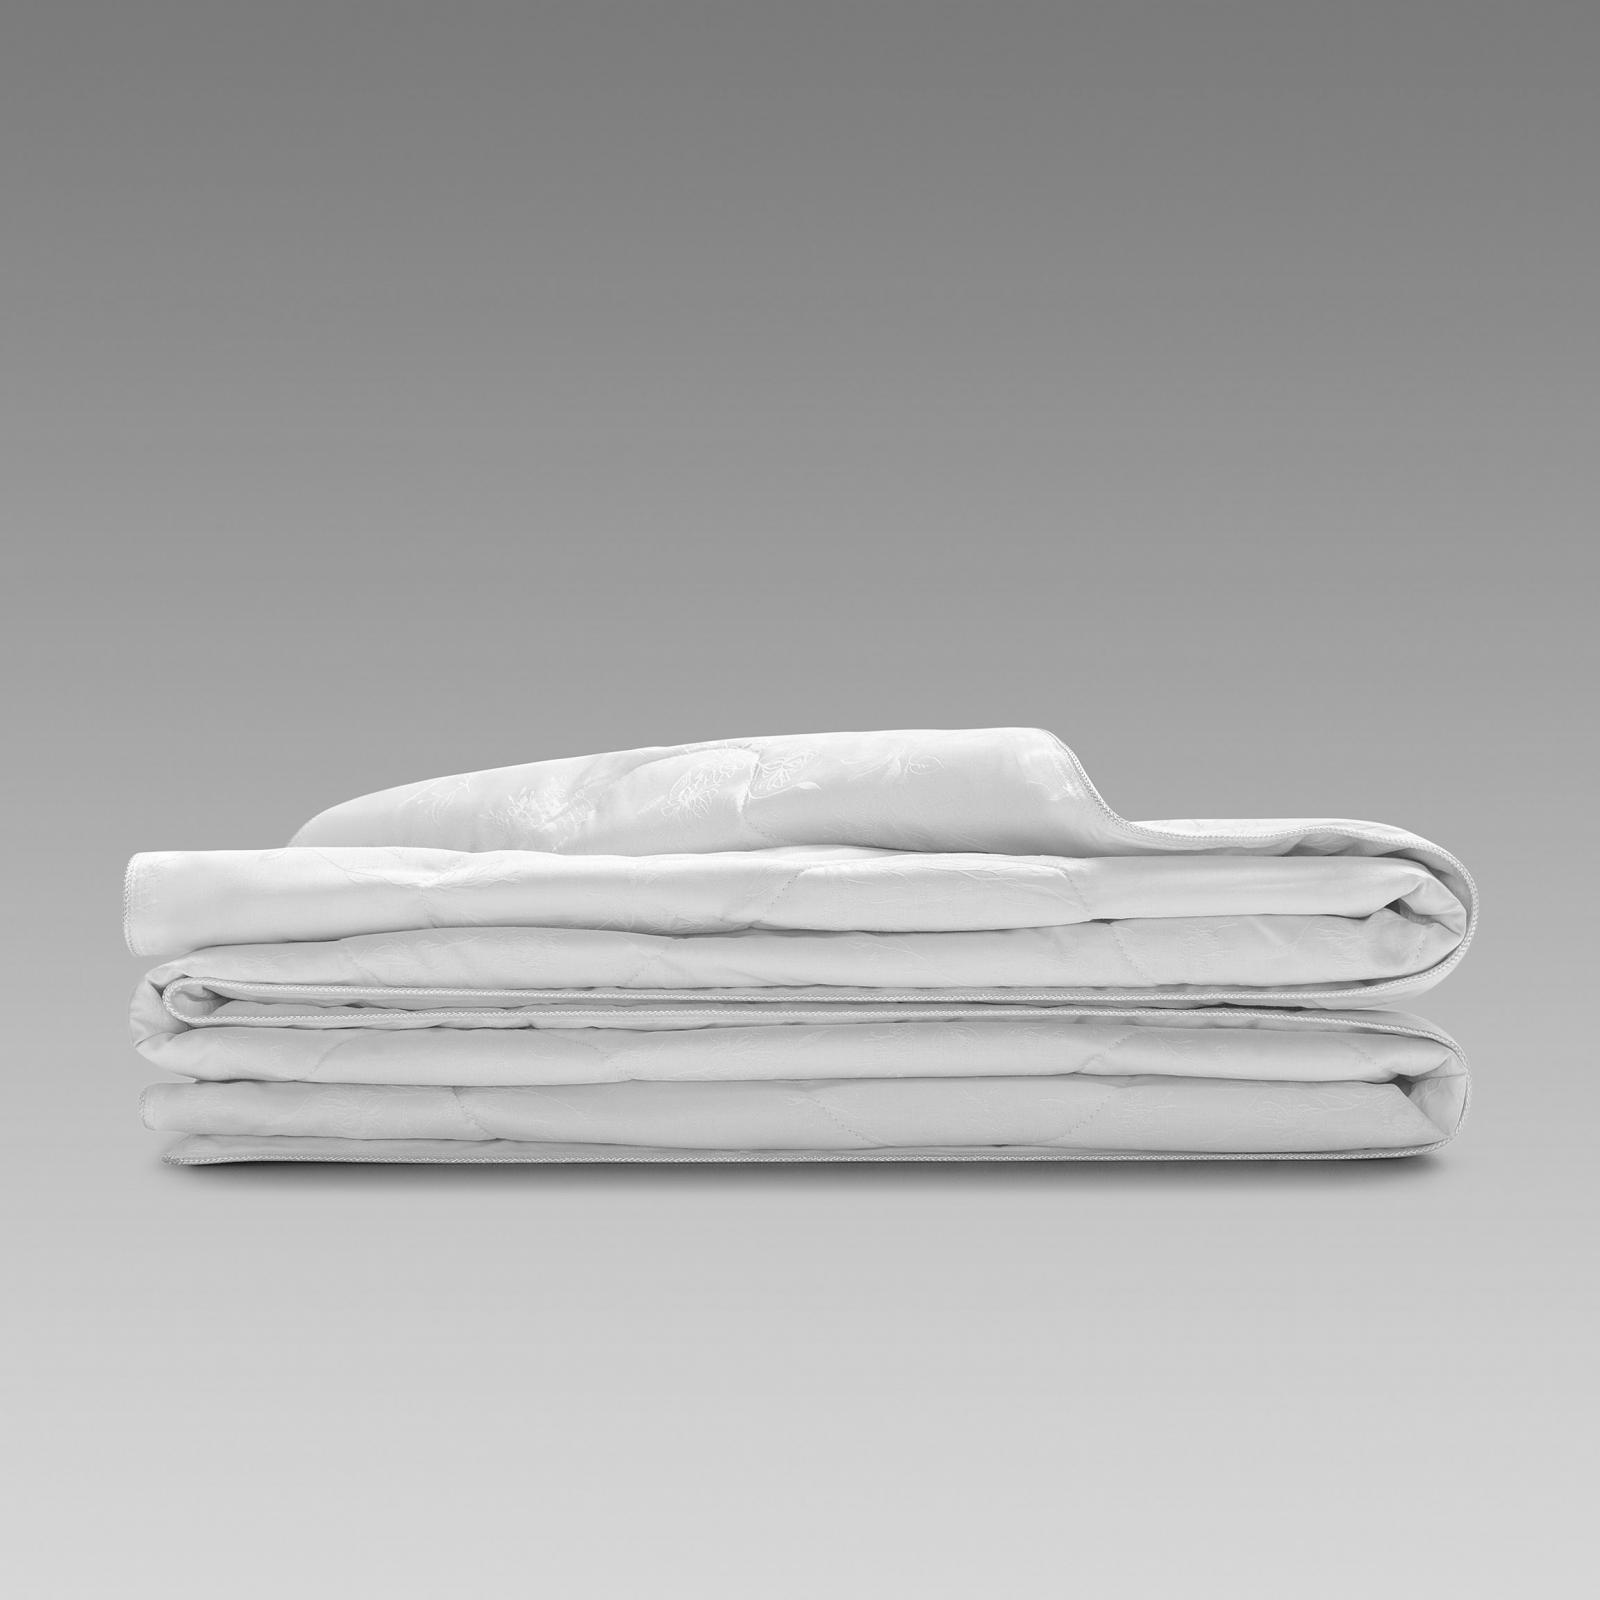 Одеяло Togas лотос 20.04.29.0003, размер 140х200 см - фото 2